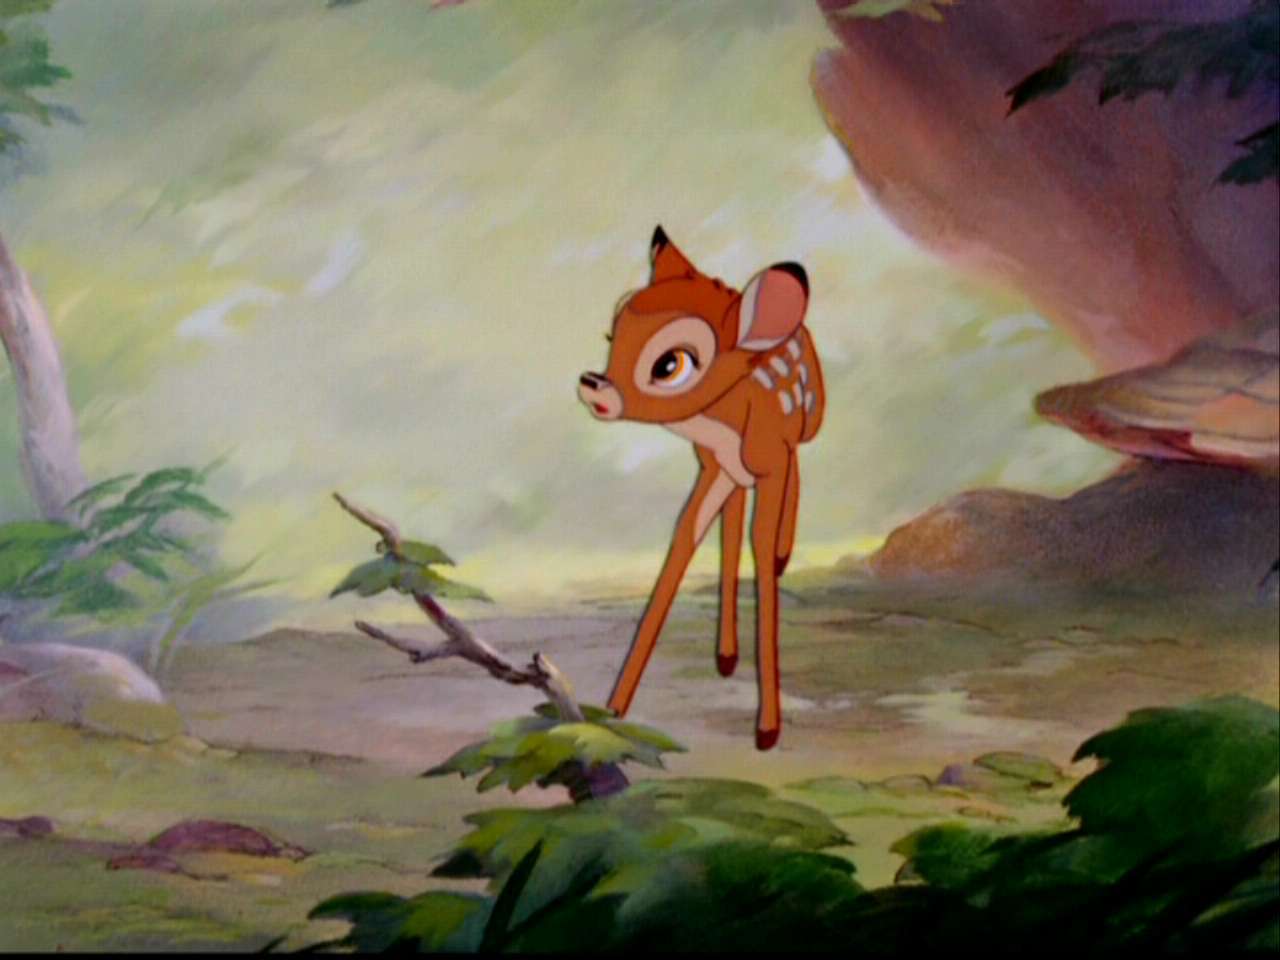 Disney Bambi Image Wallpaper for PC